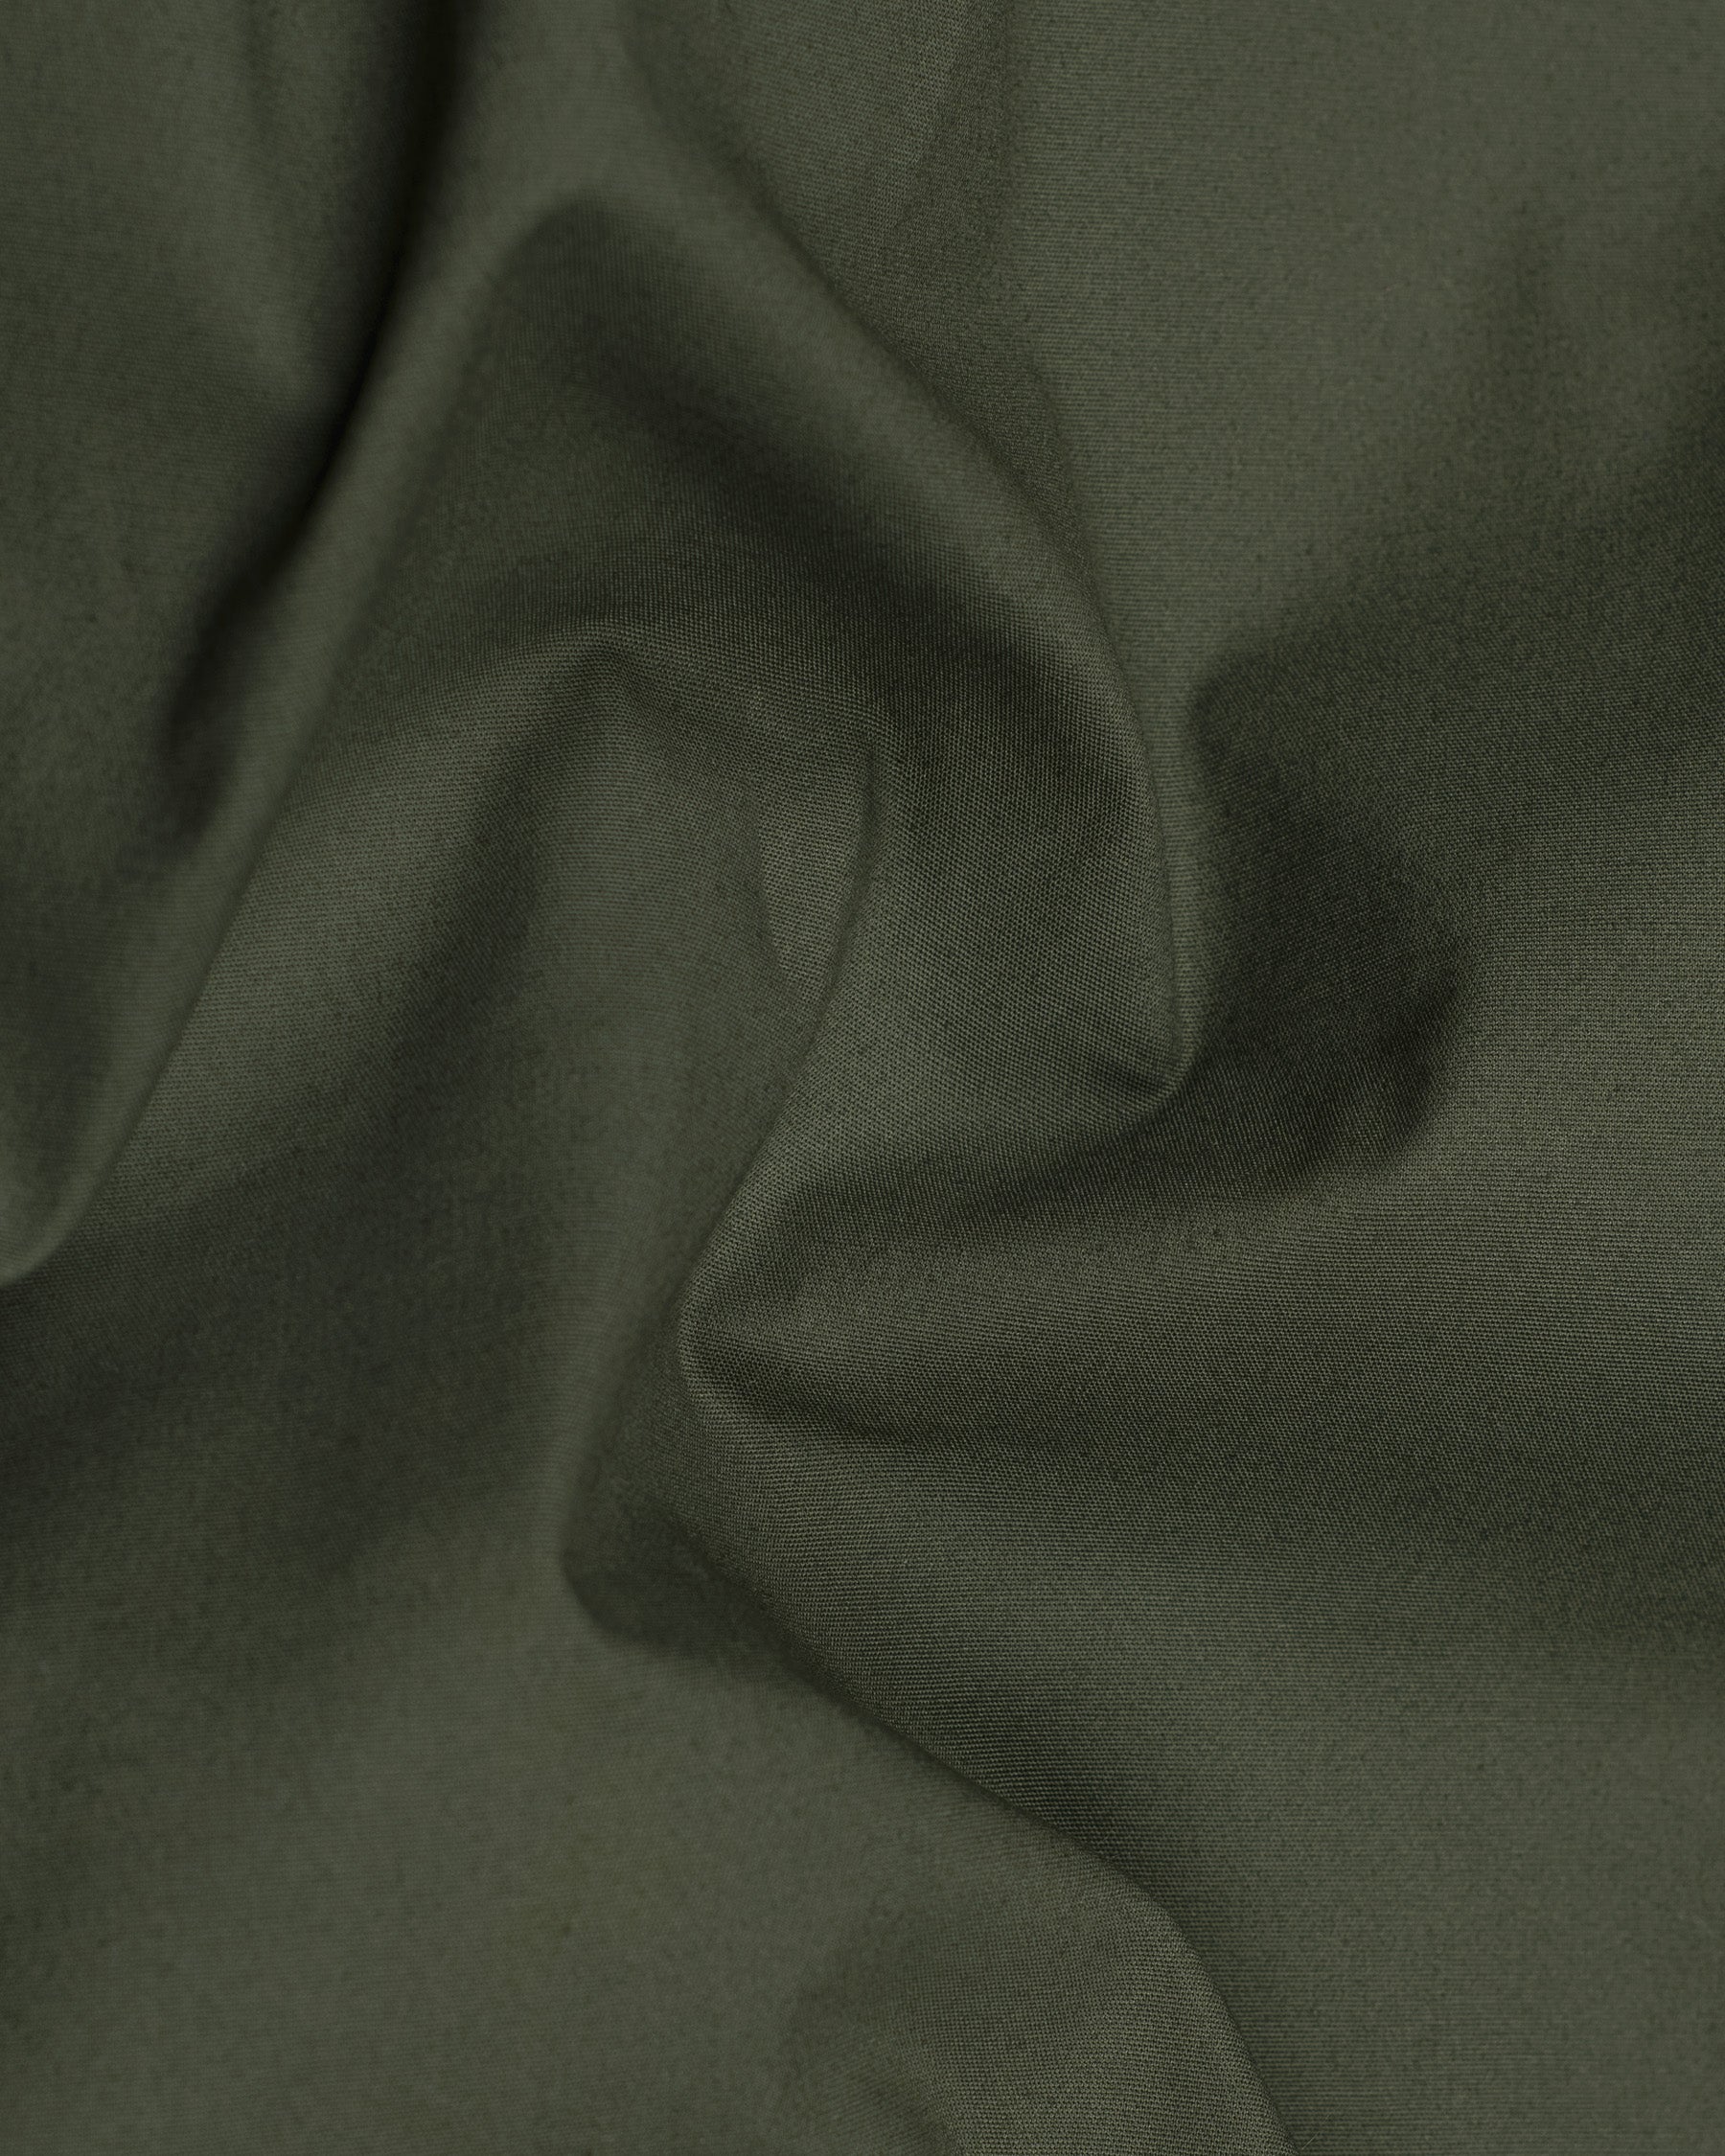 Lunar Green Premium Cotton Pant